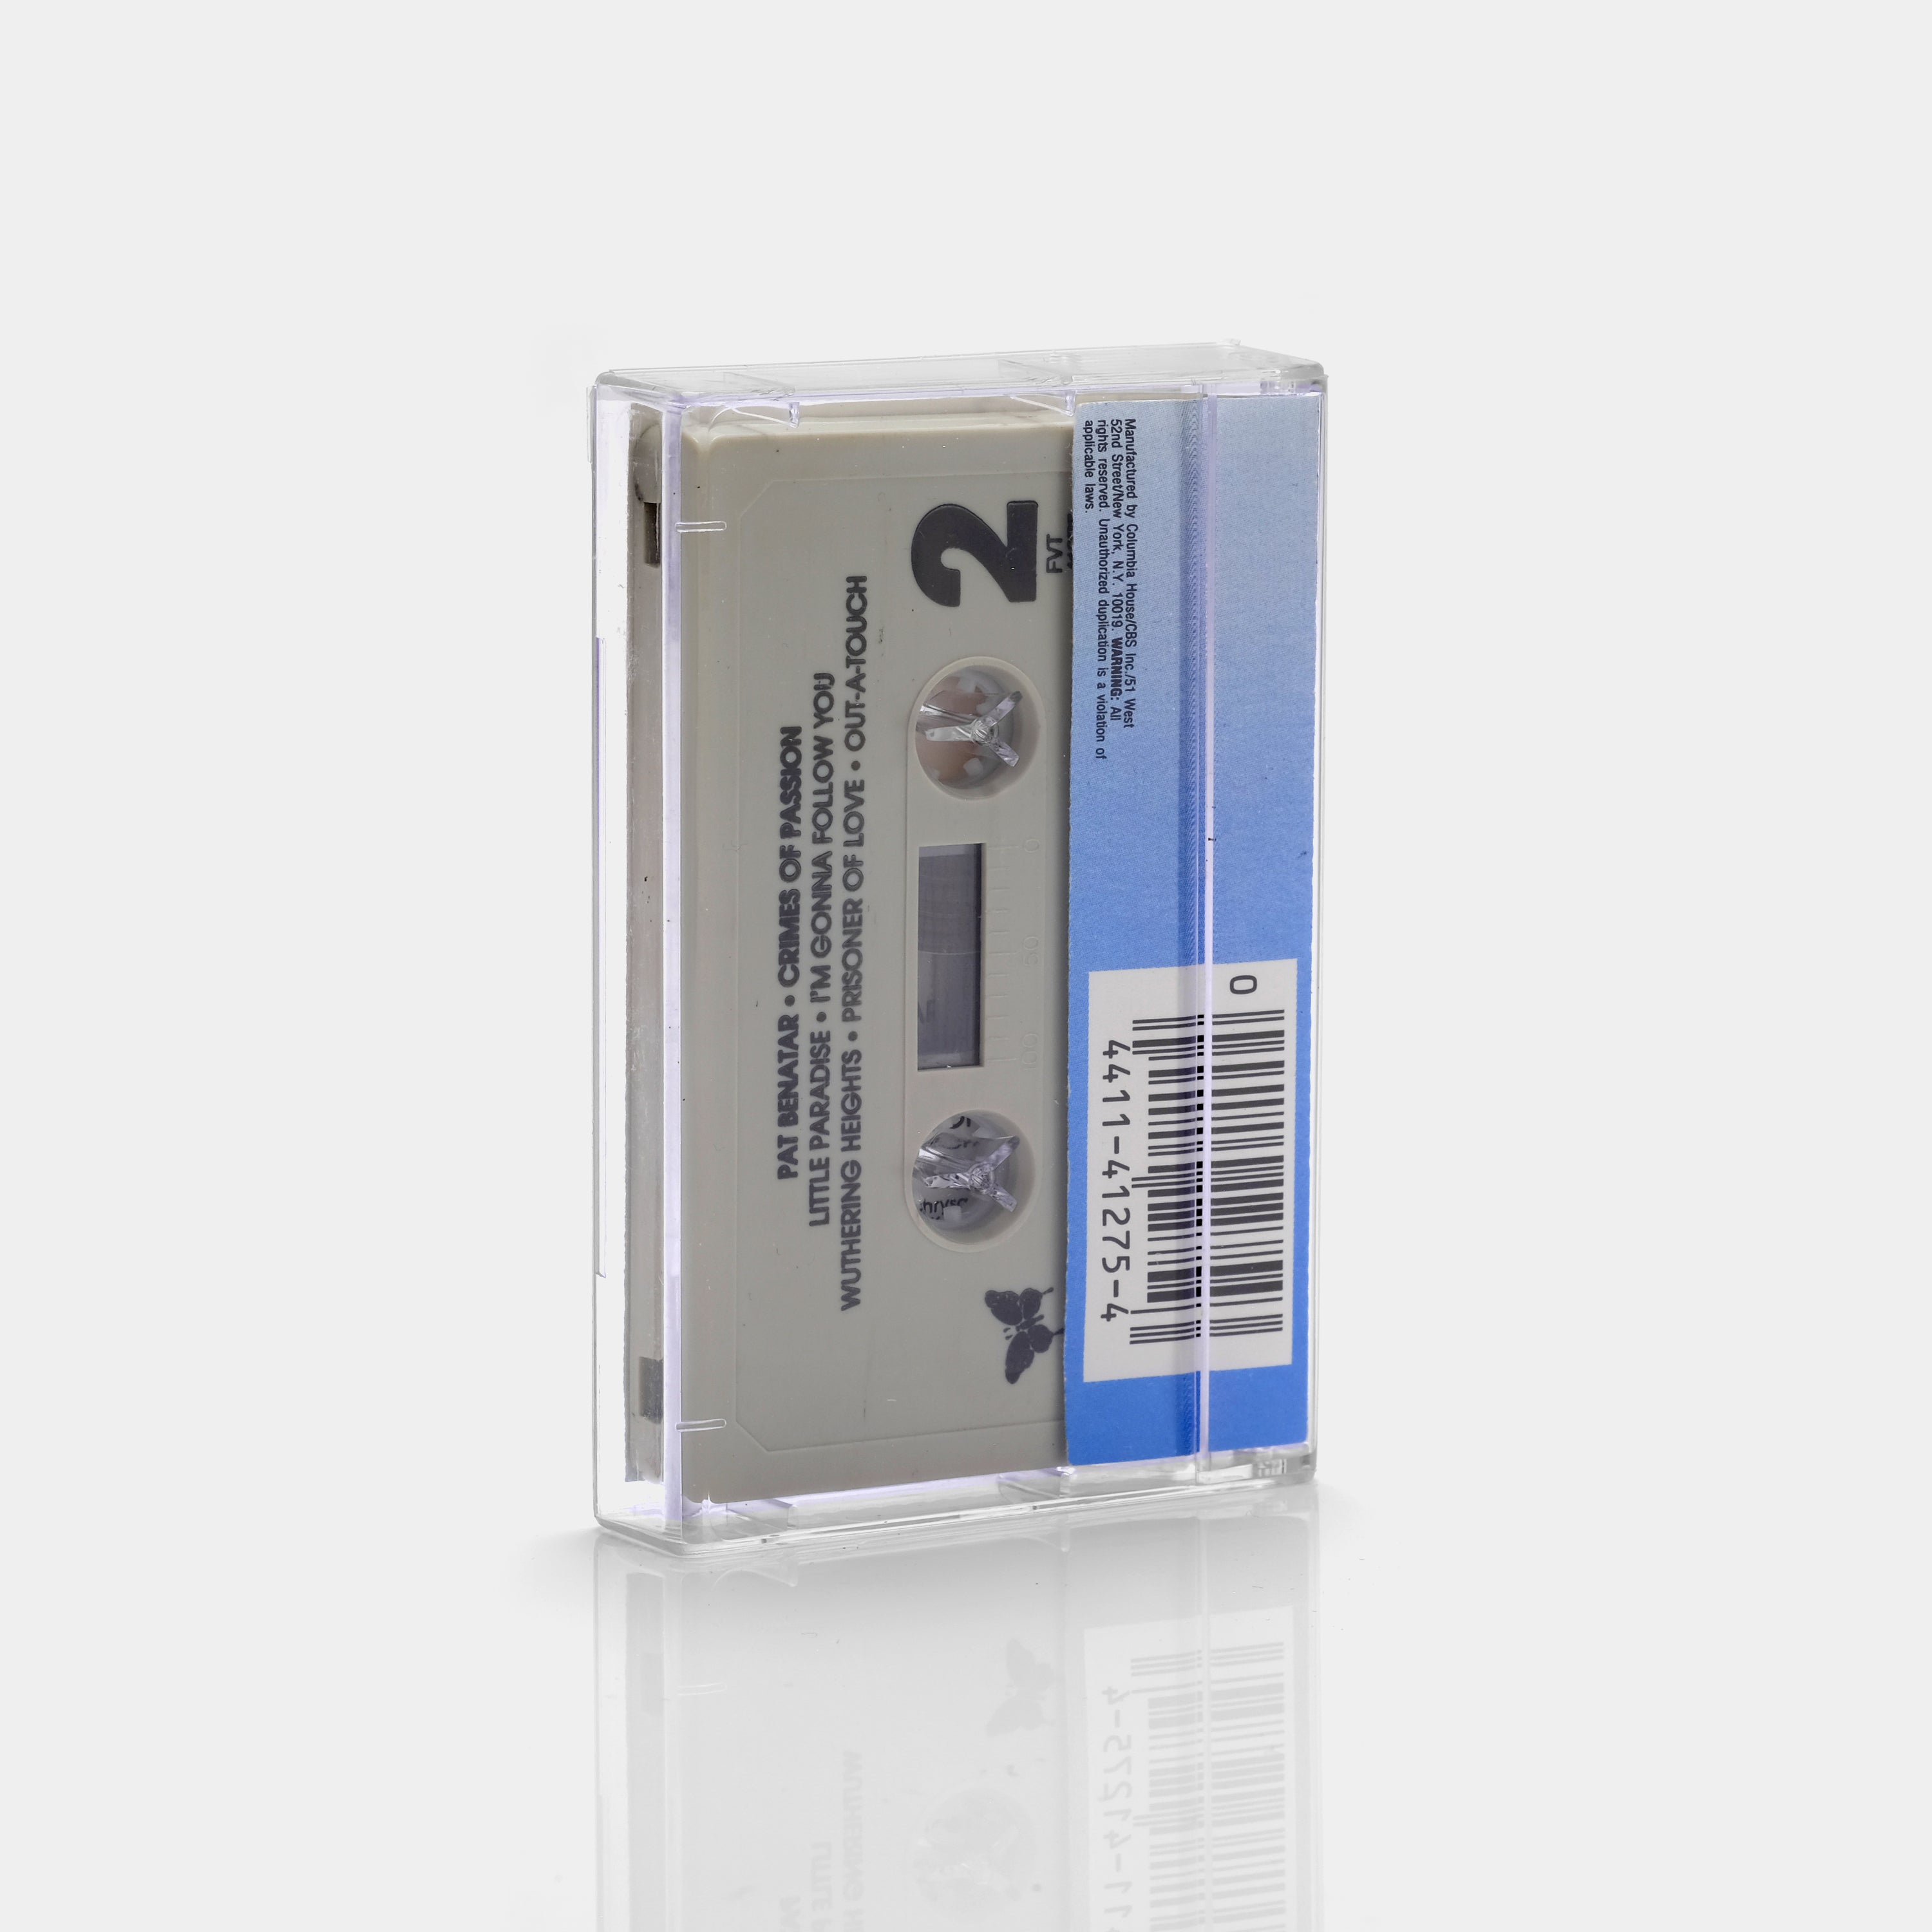 Pat Benatar - Crimes Of Passion Cassette Tape